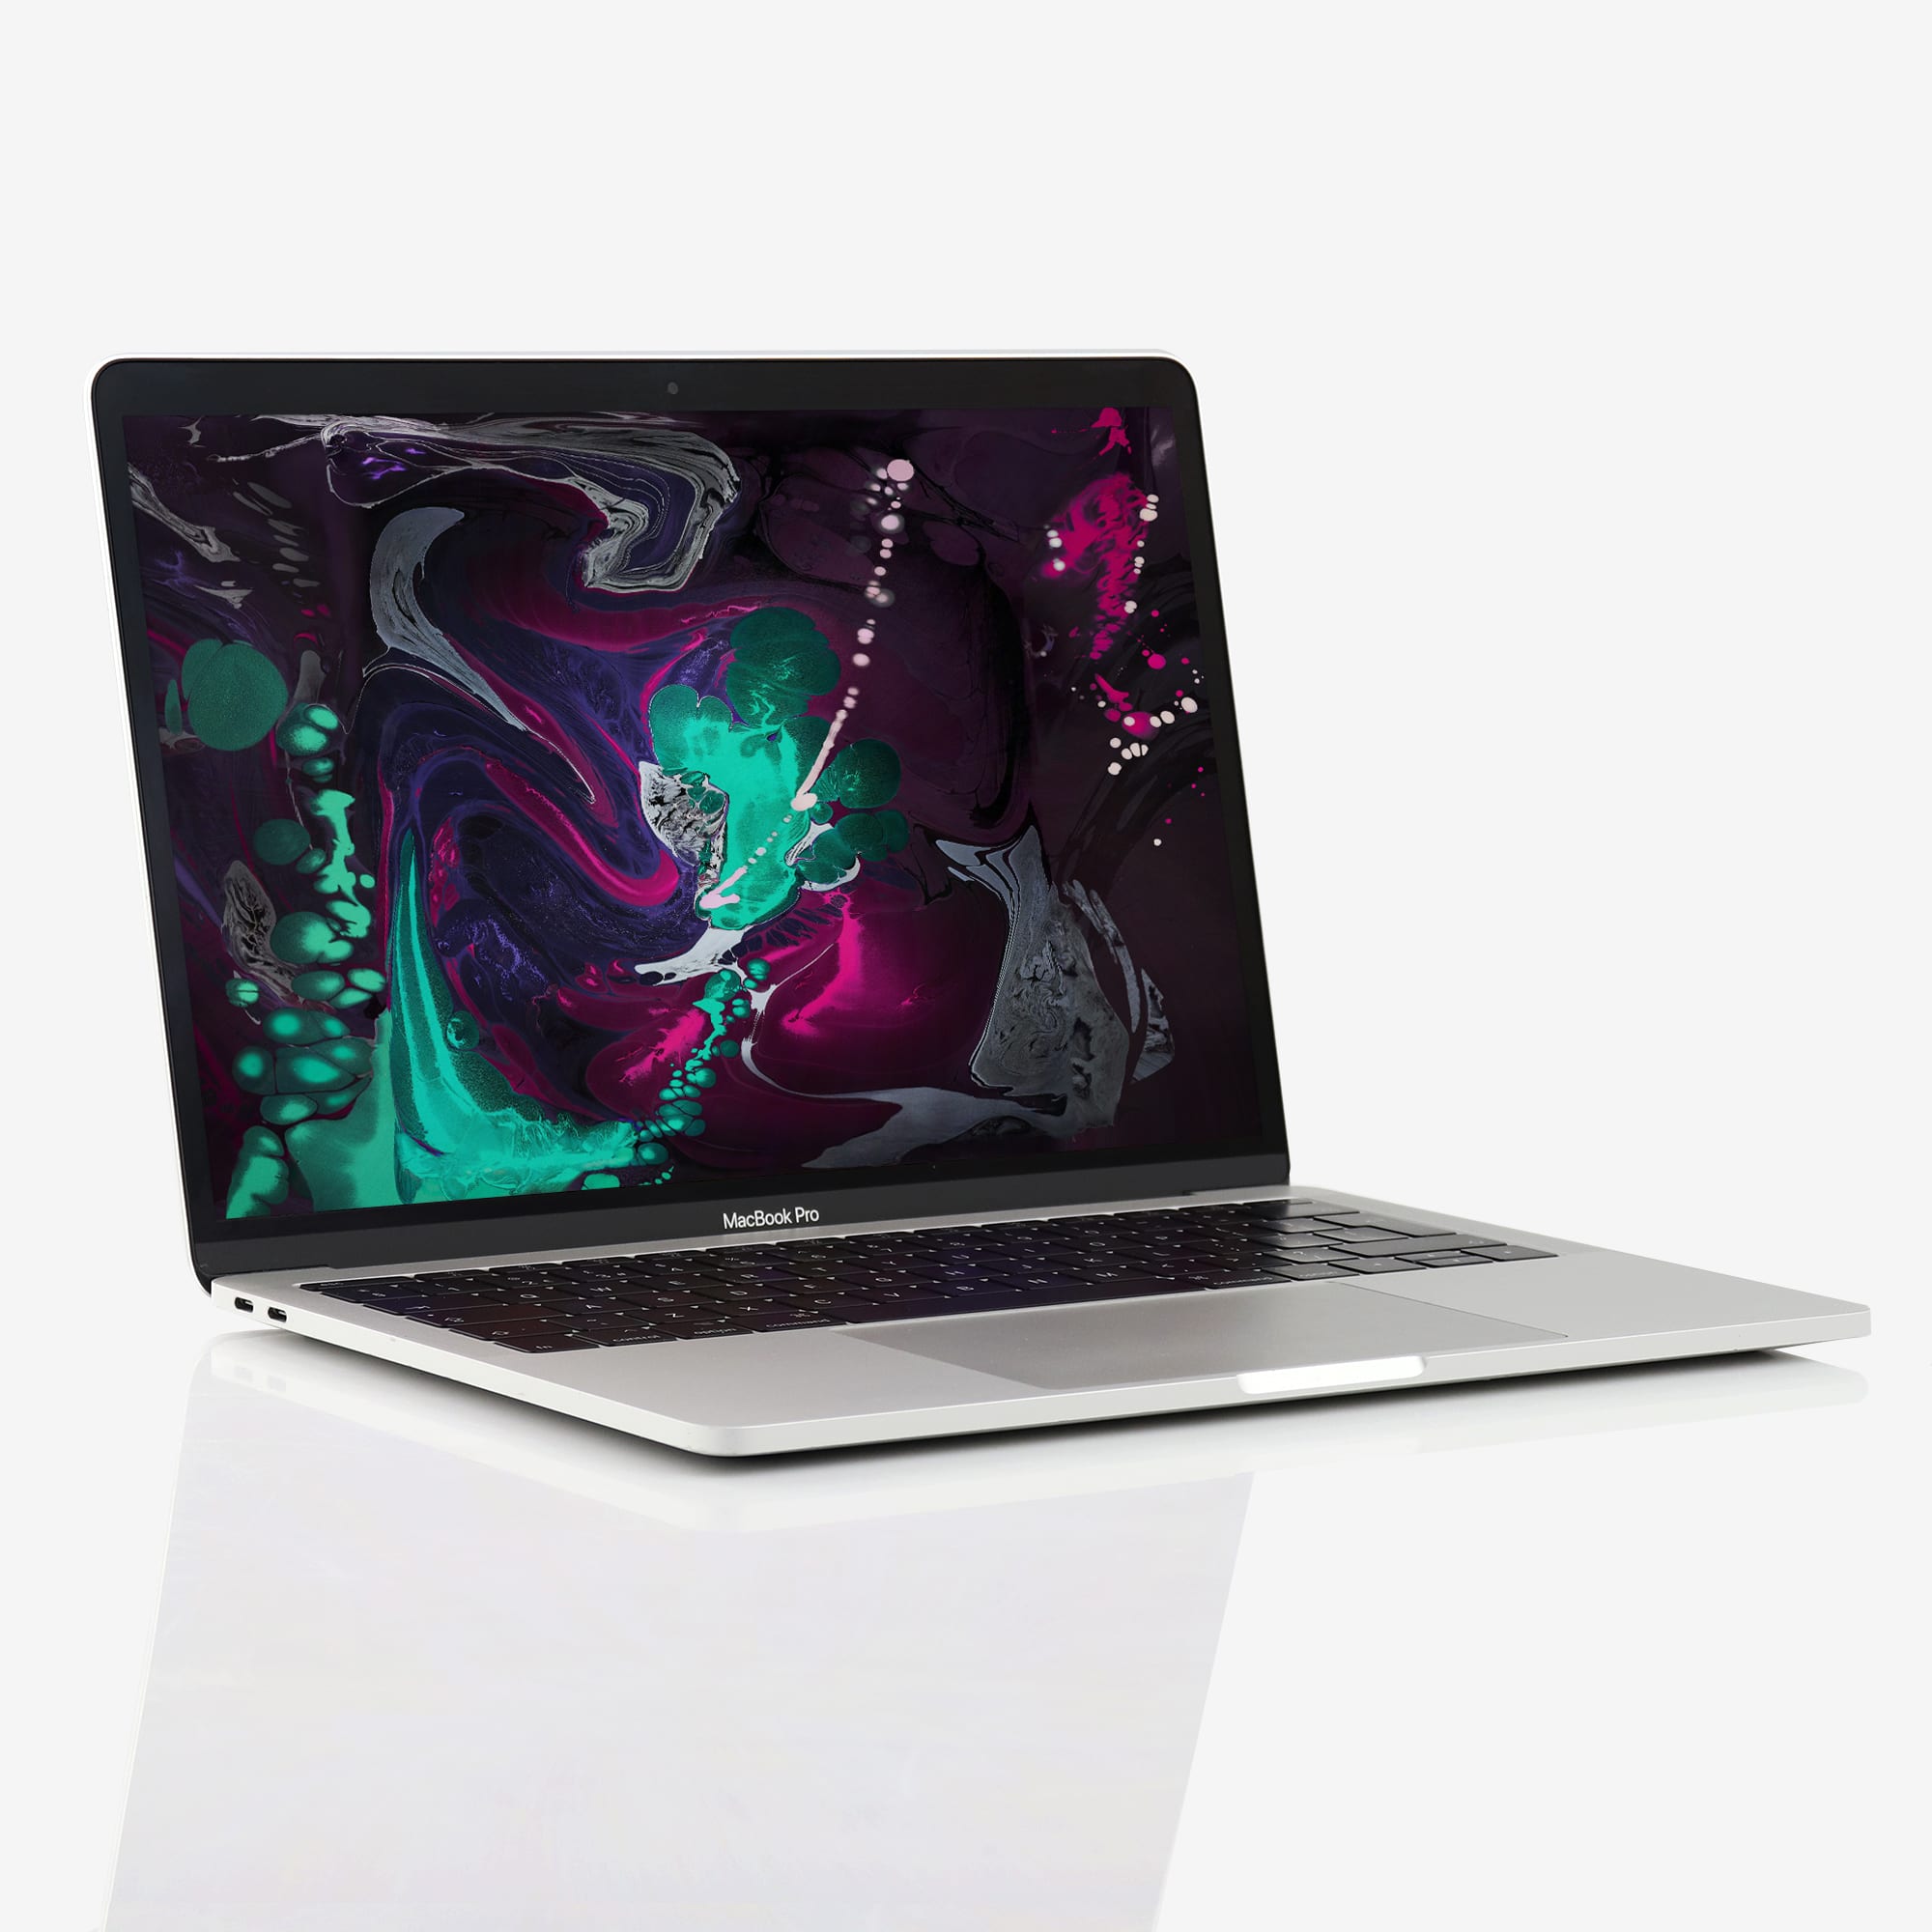 1 x Apple MacBook Pro Retina 13 Inch Intel Core i7 2.40 GHz (2016)